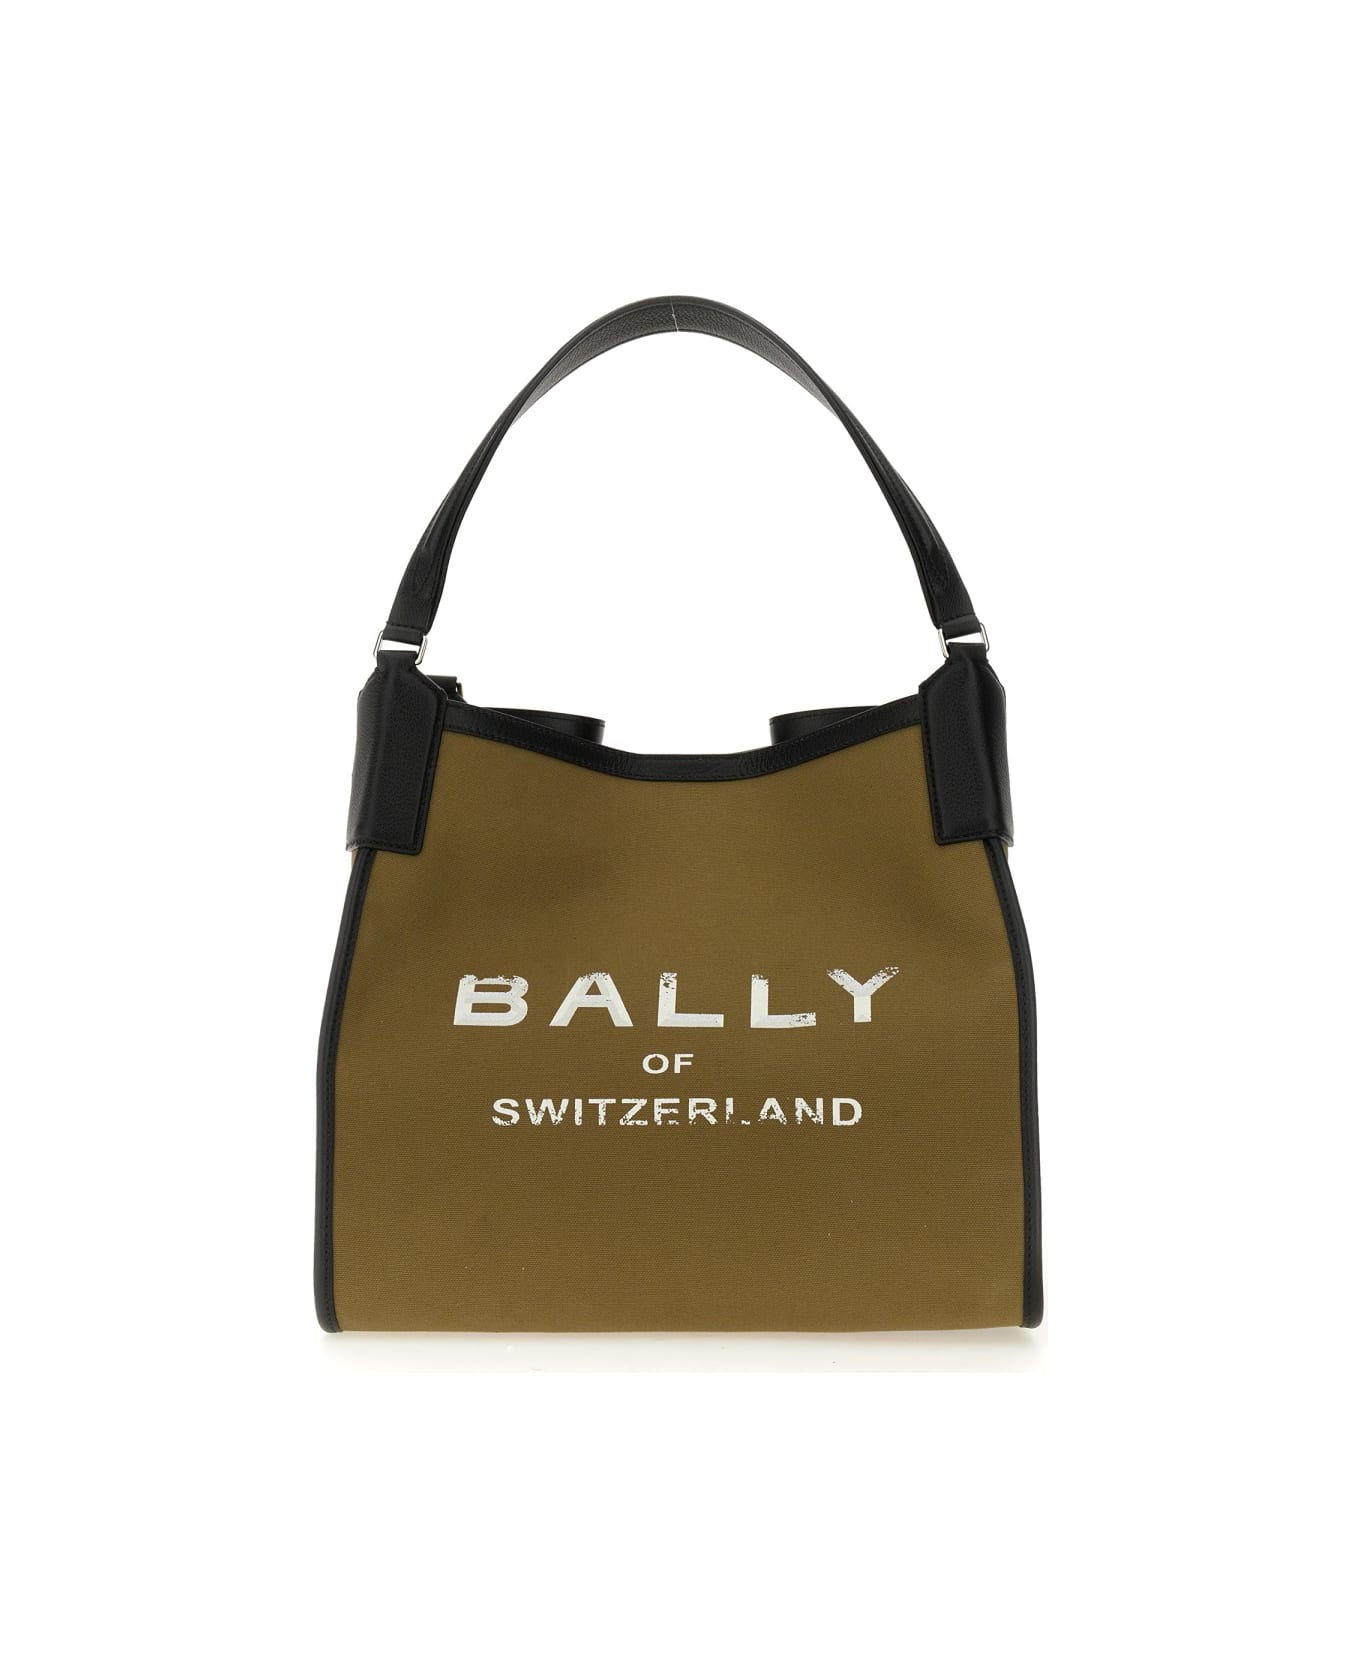 Bally Shopping Bag "arkle" Large - MULTICOLOUR